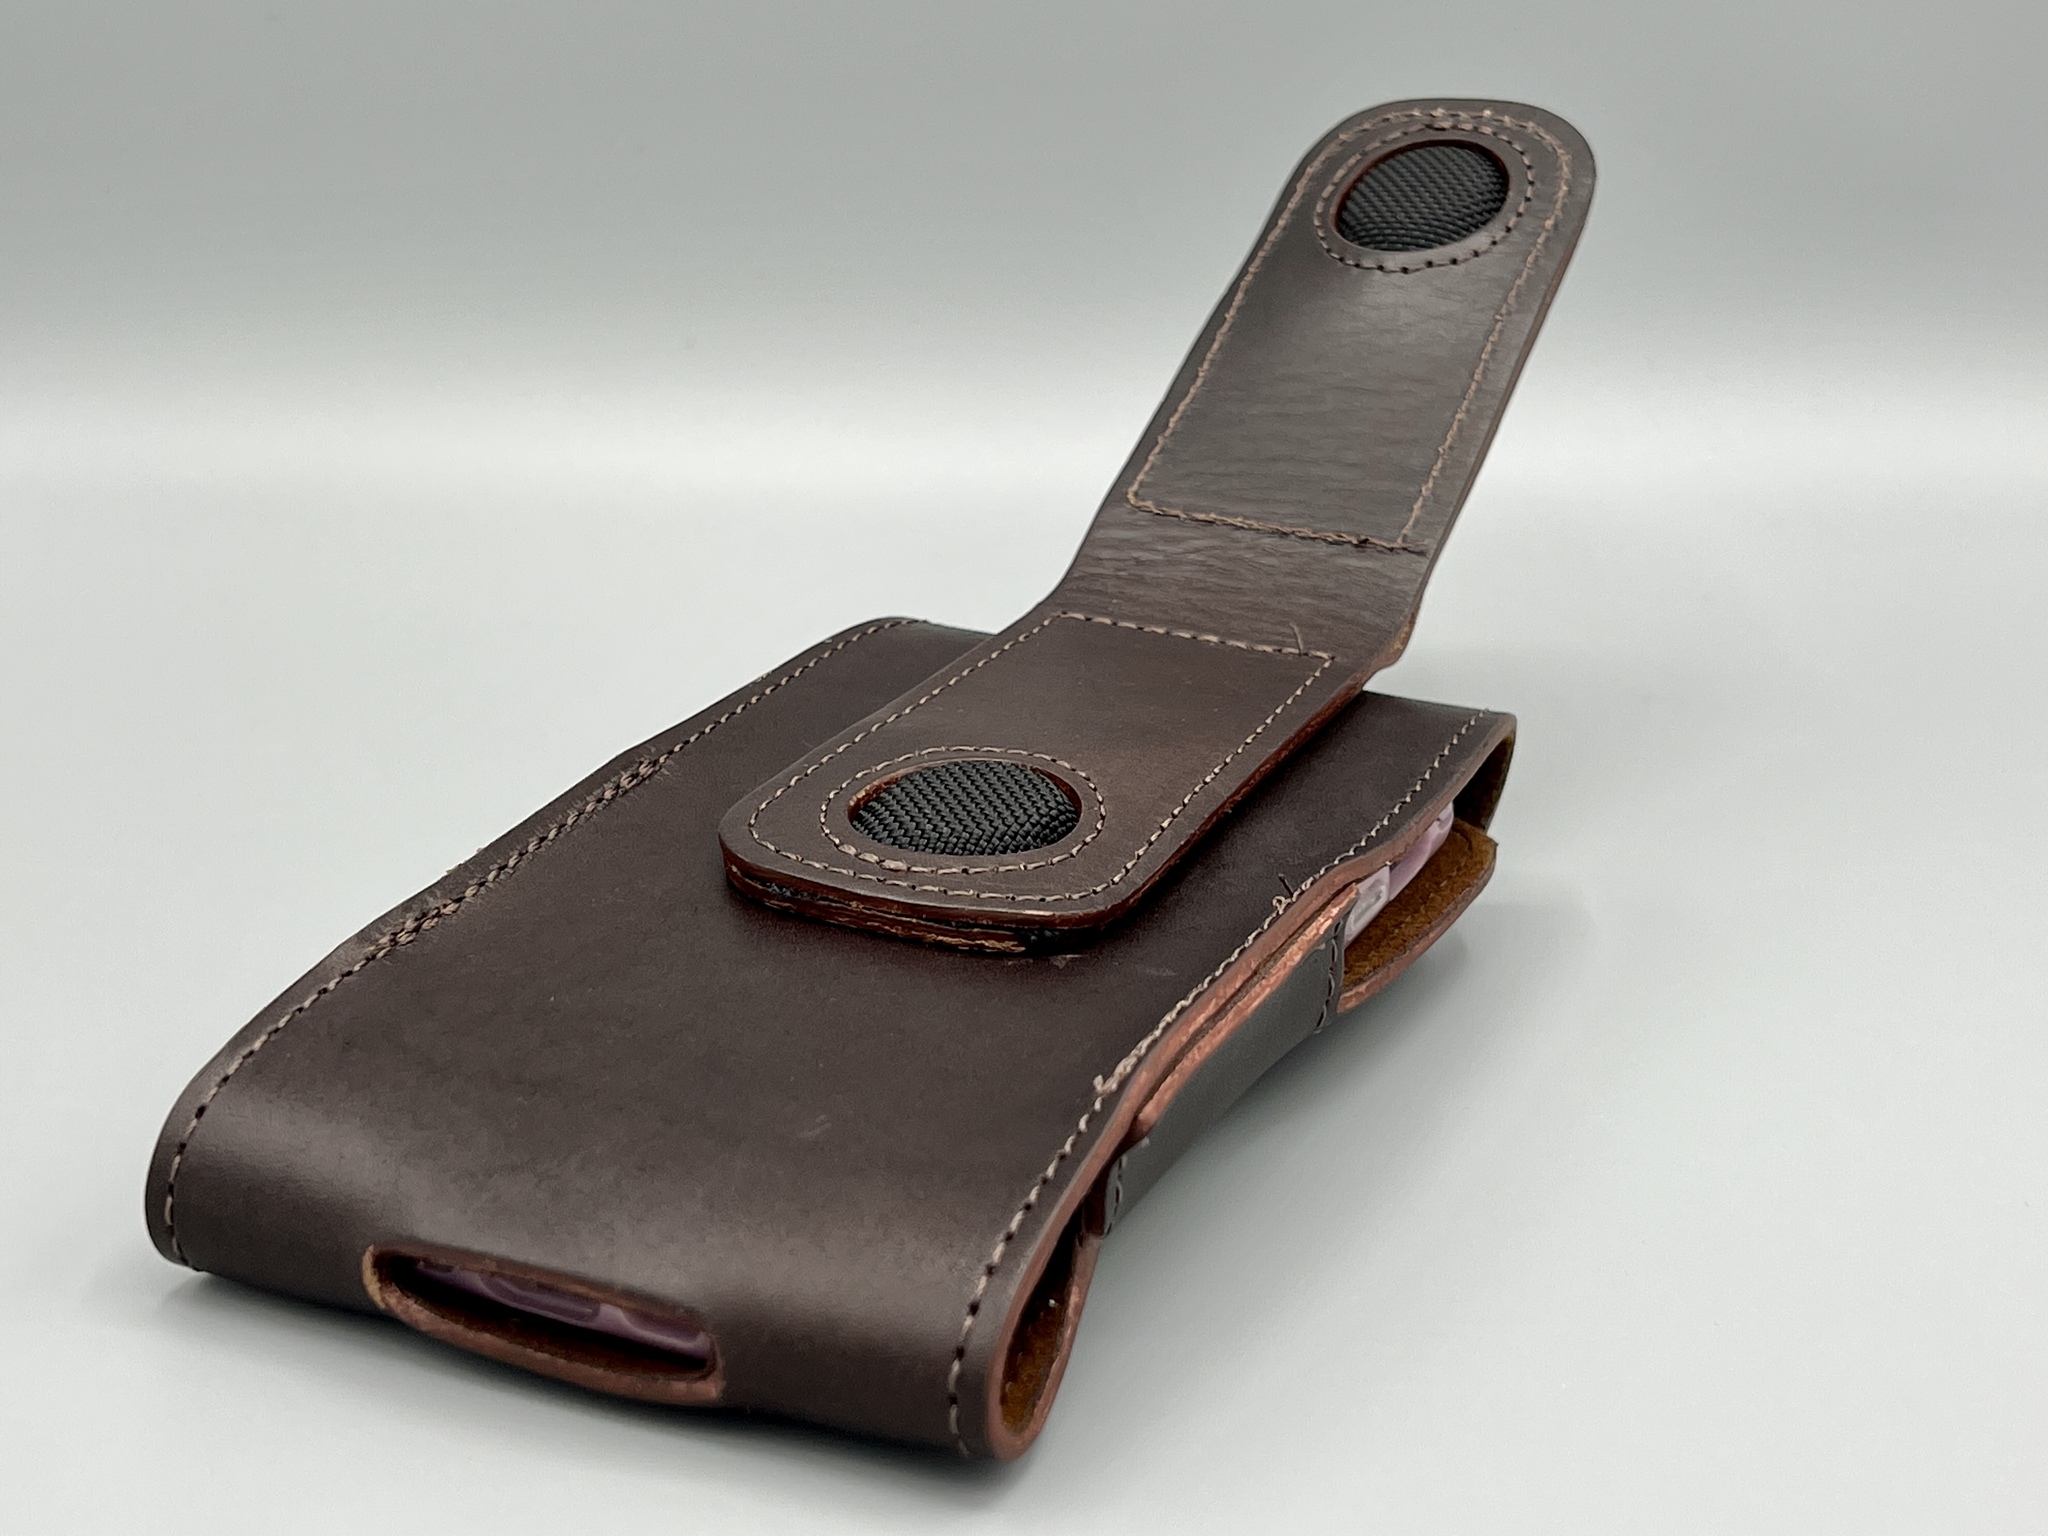 Waterfield Designs Latigo Leather Iphone Holster Clip